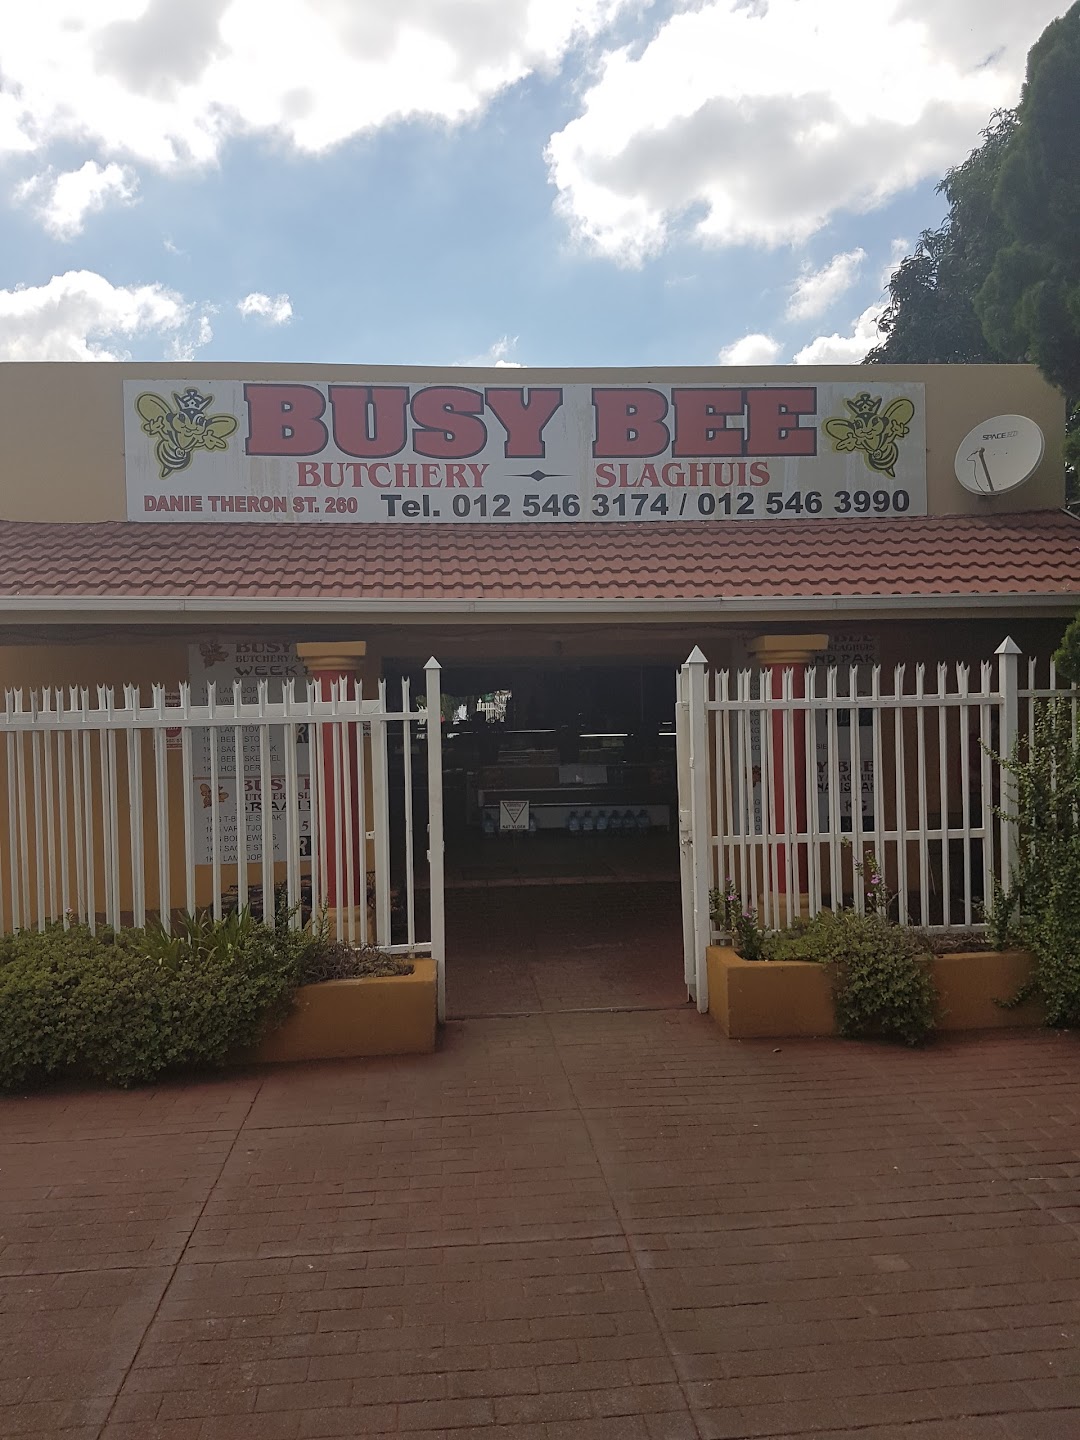 Busy Bee Butchery